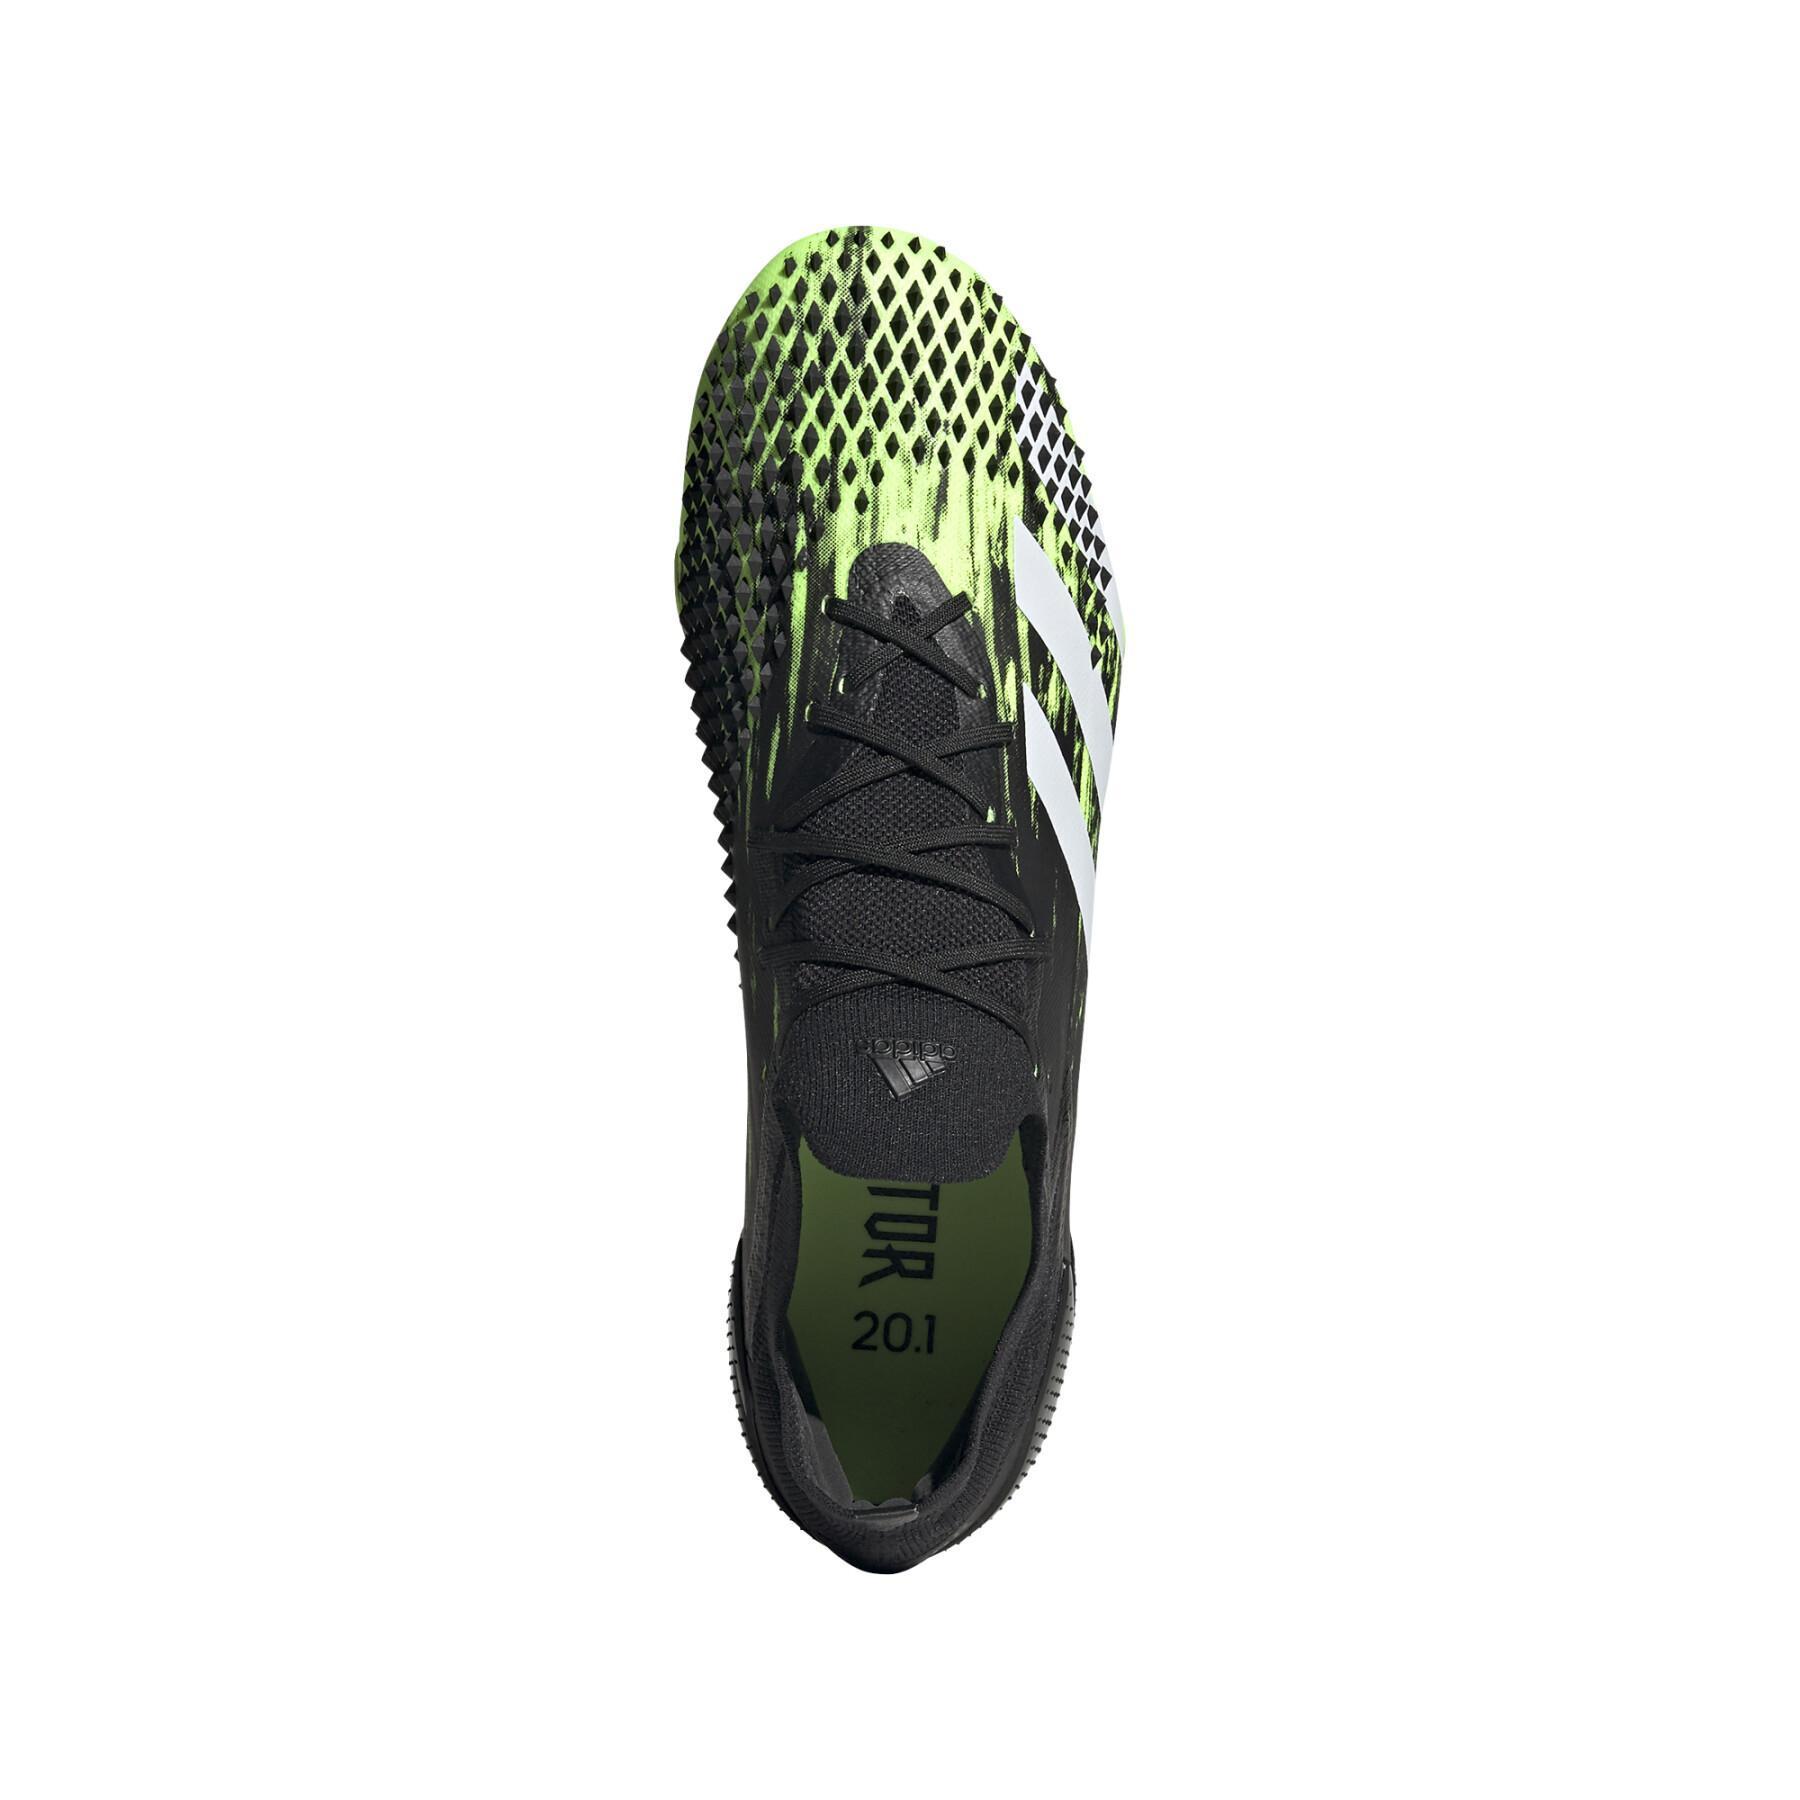 Soccer shoes adidas Predator Mutator 20.1 Low SG